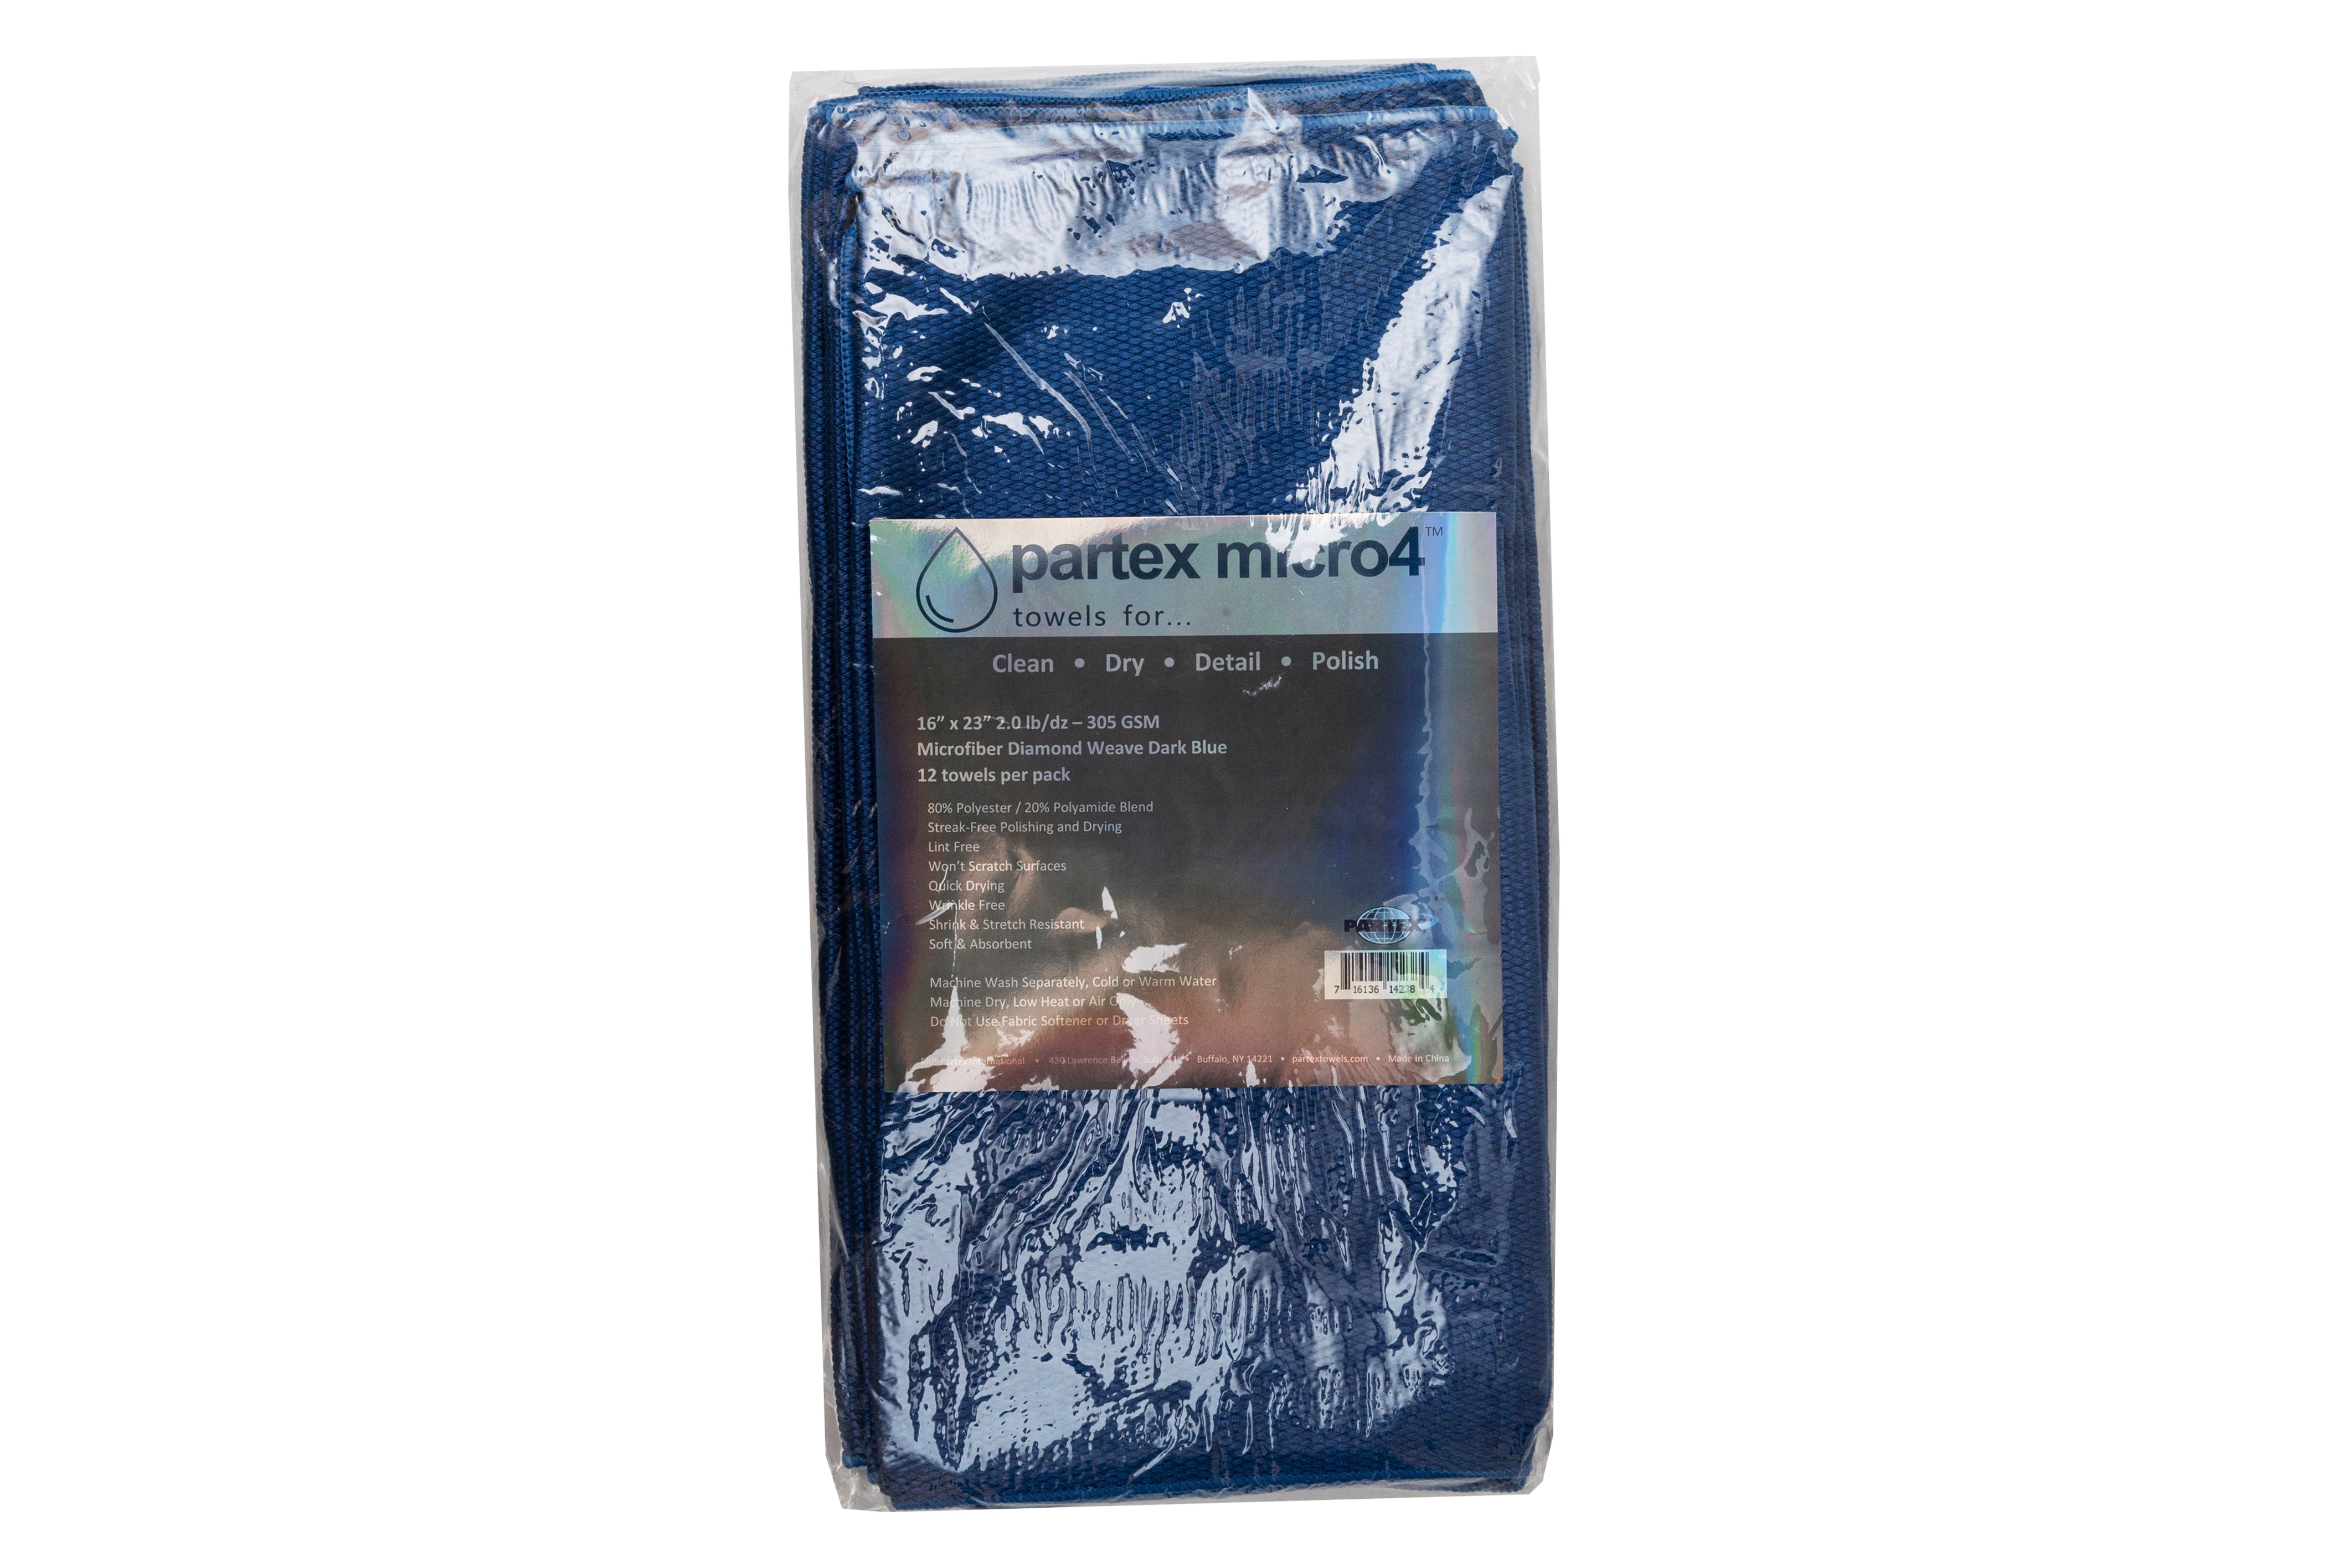 Partex micro4™ Microfiber 16" x 23" Diamond Weave Towels